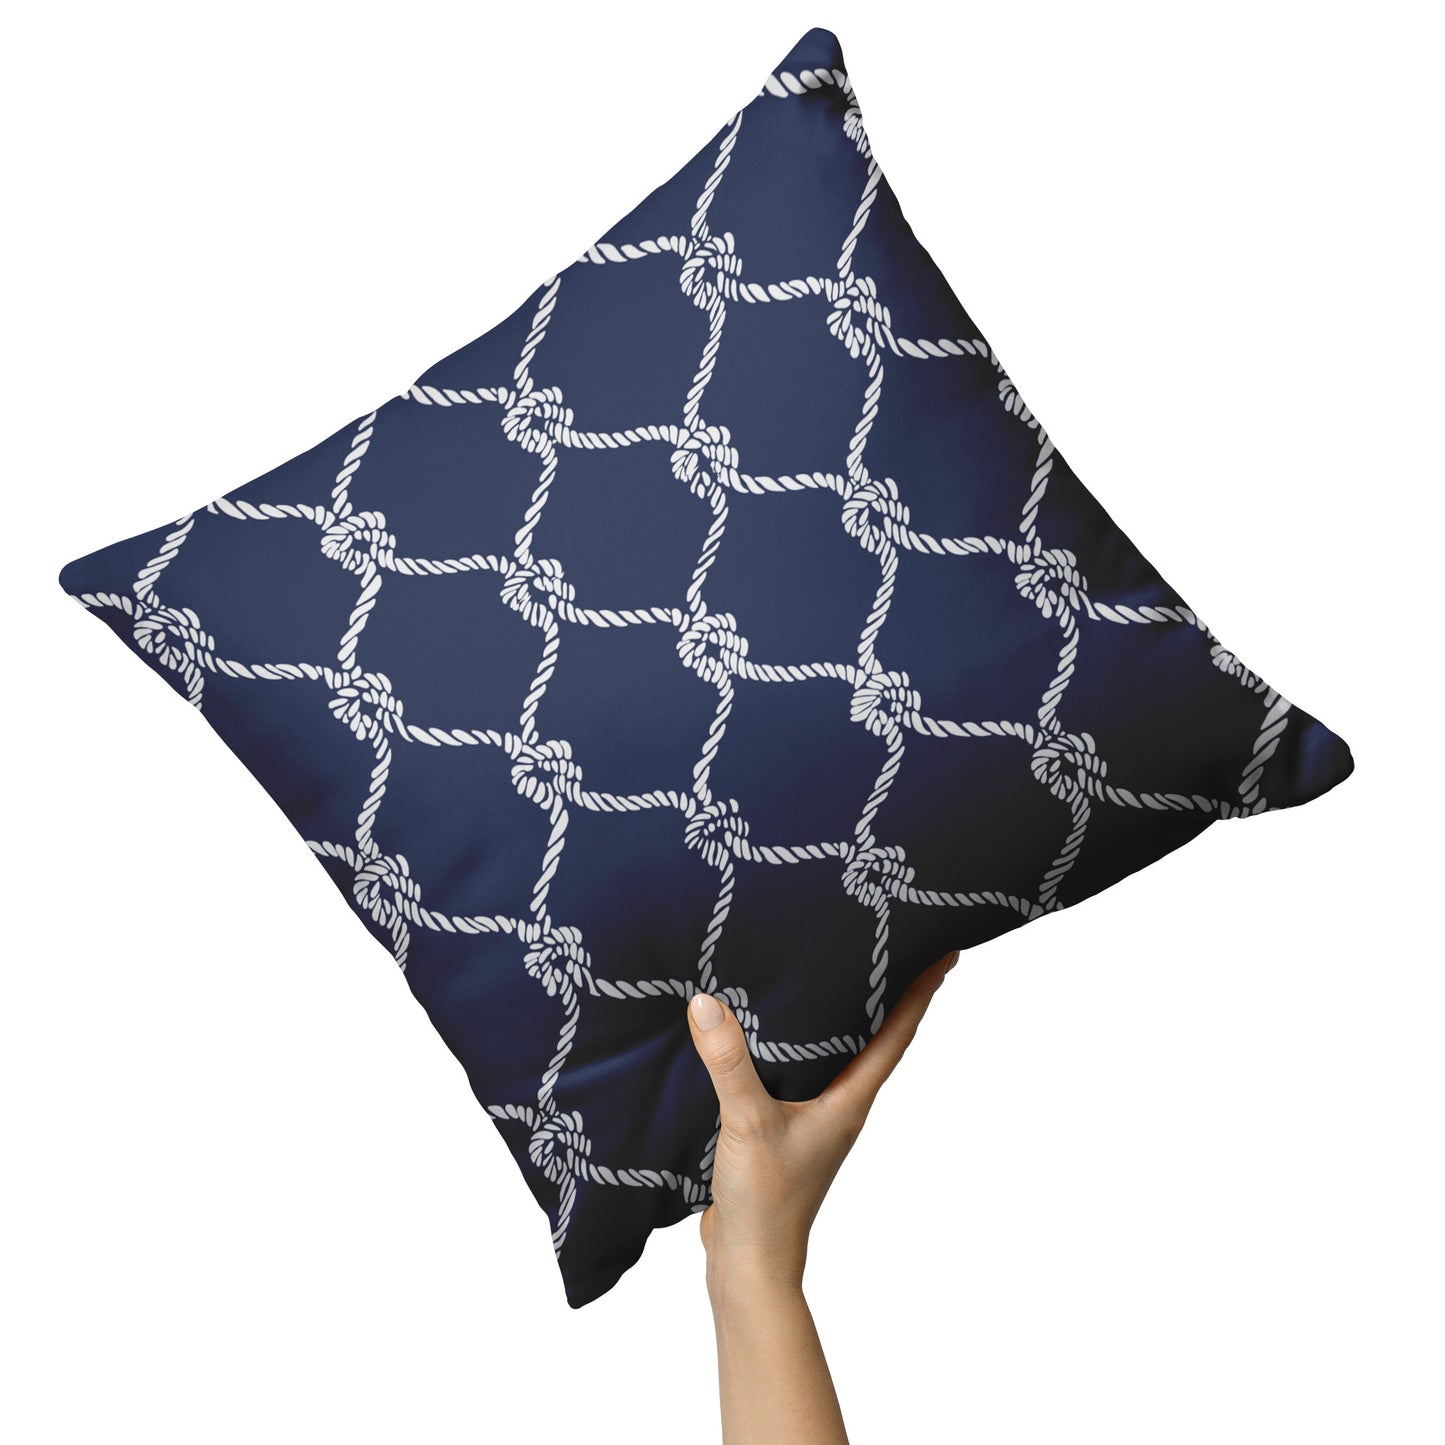 Nautical Netting Design on Navy Blue Background, Throw Pillow